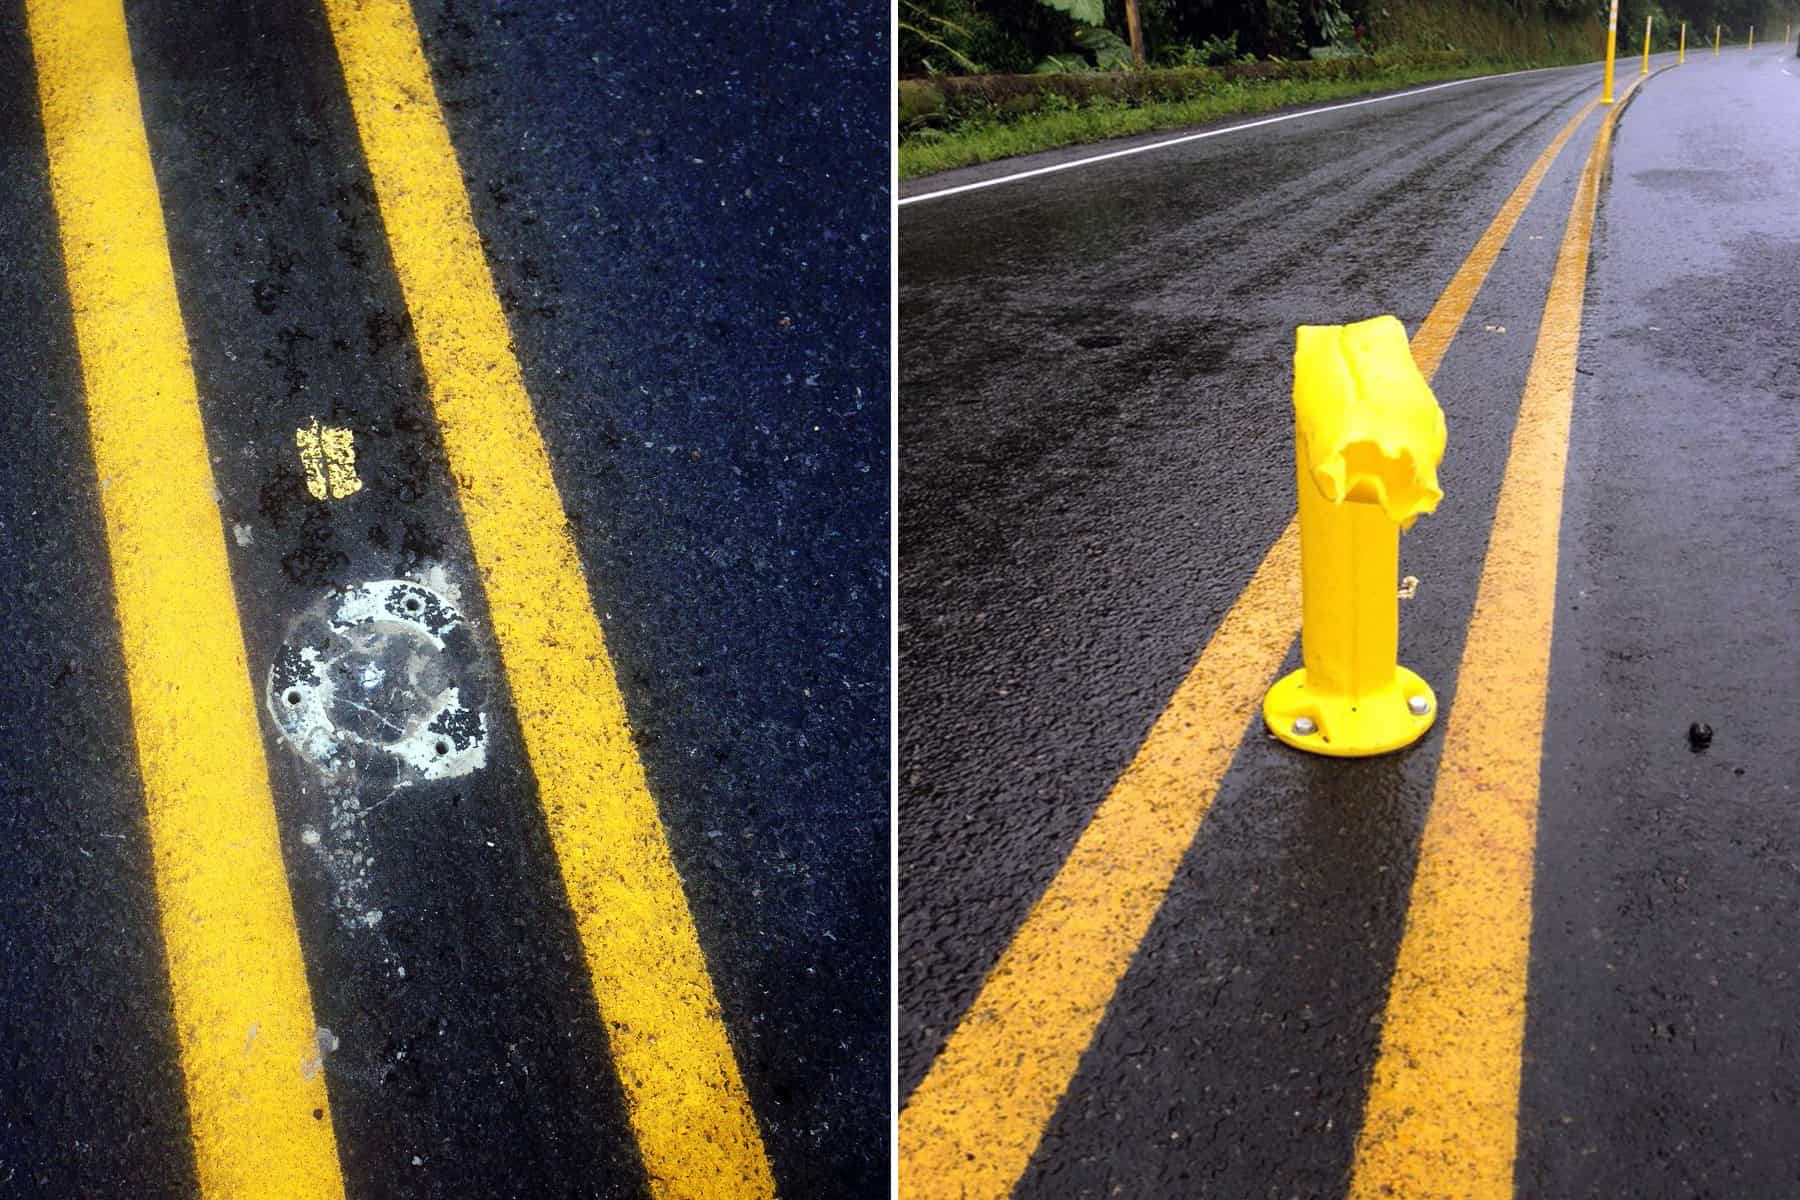 Lane dividers vandalized on Route 32, June 2015